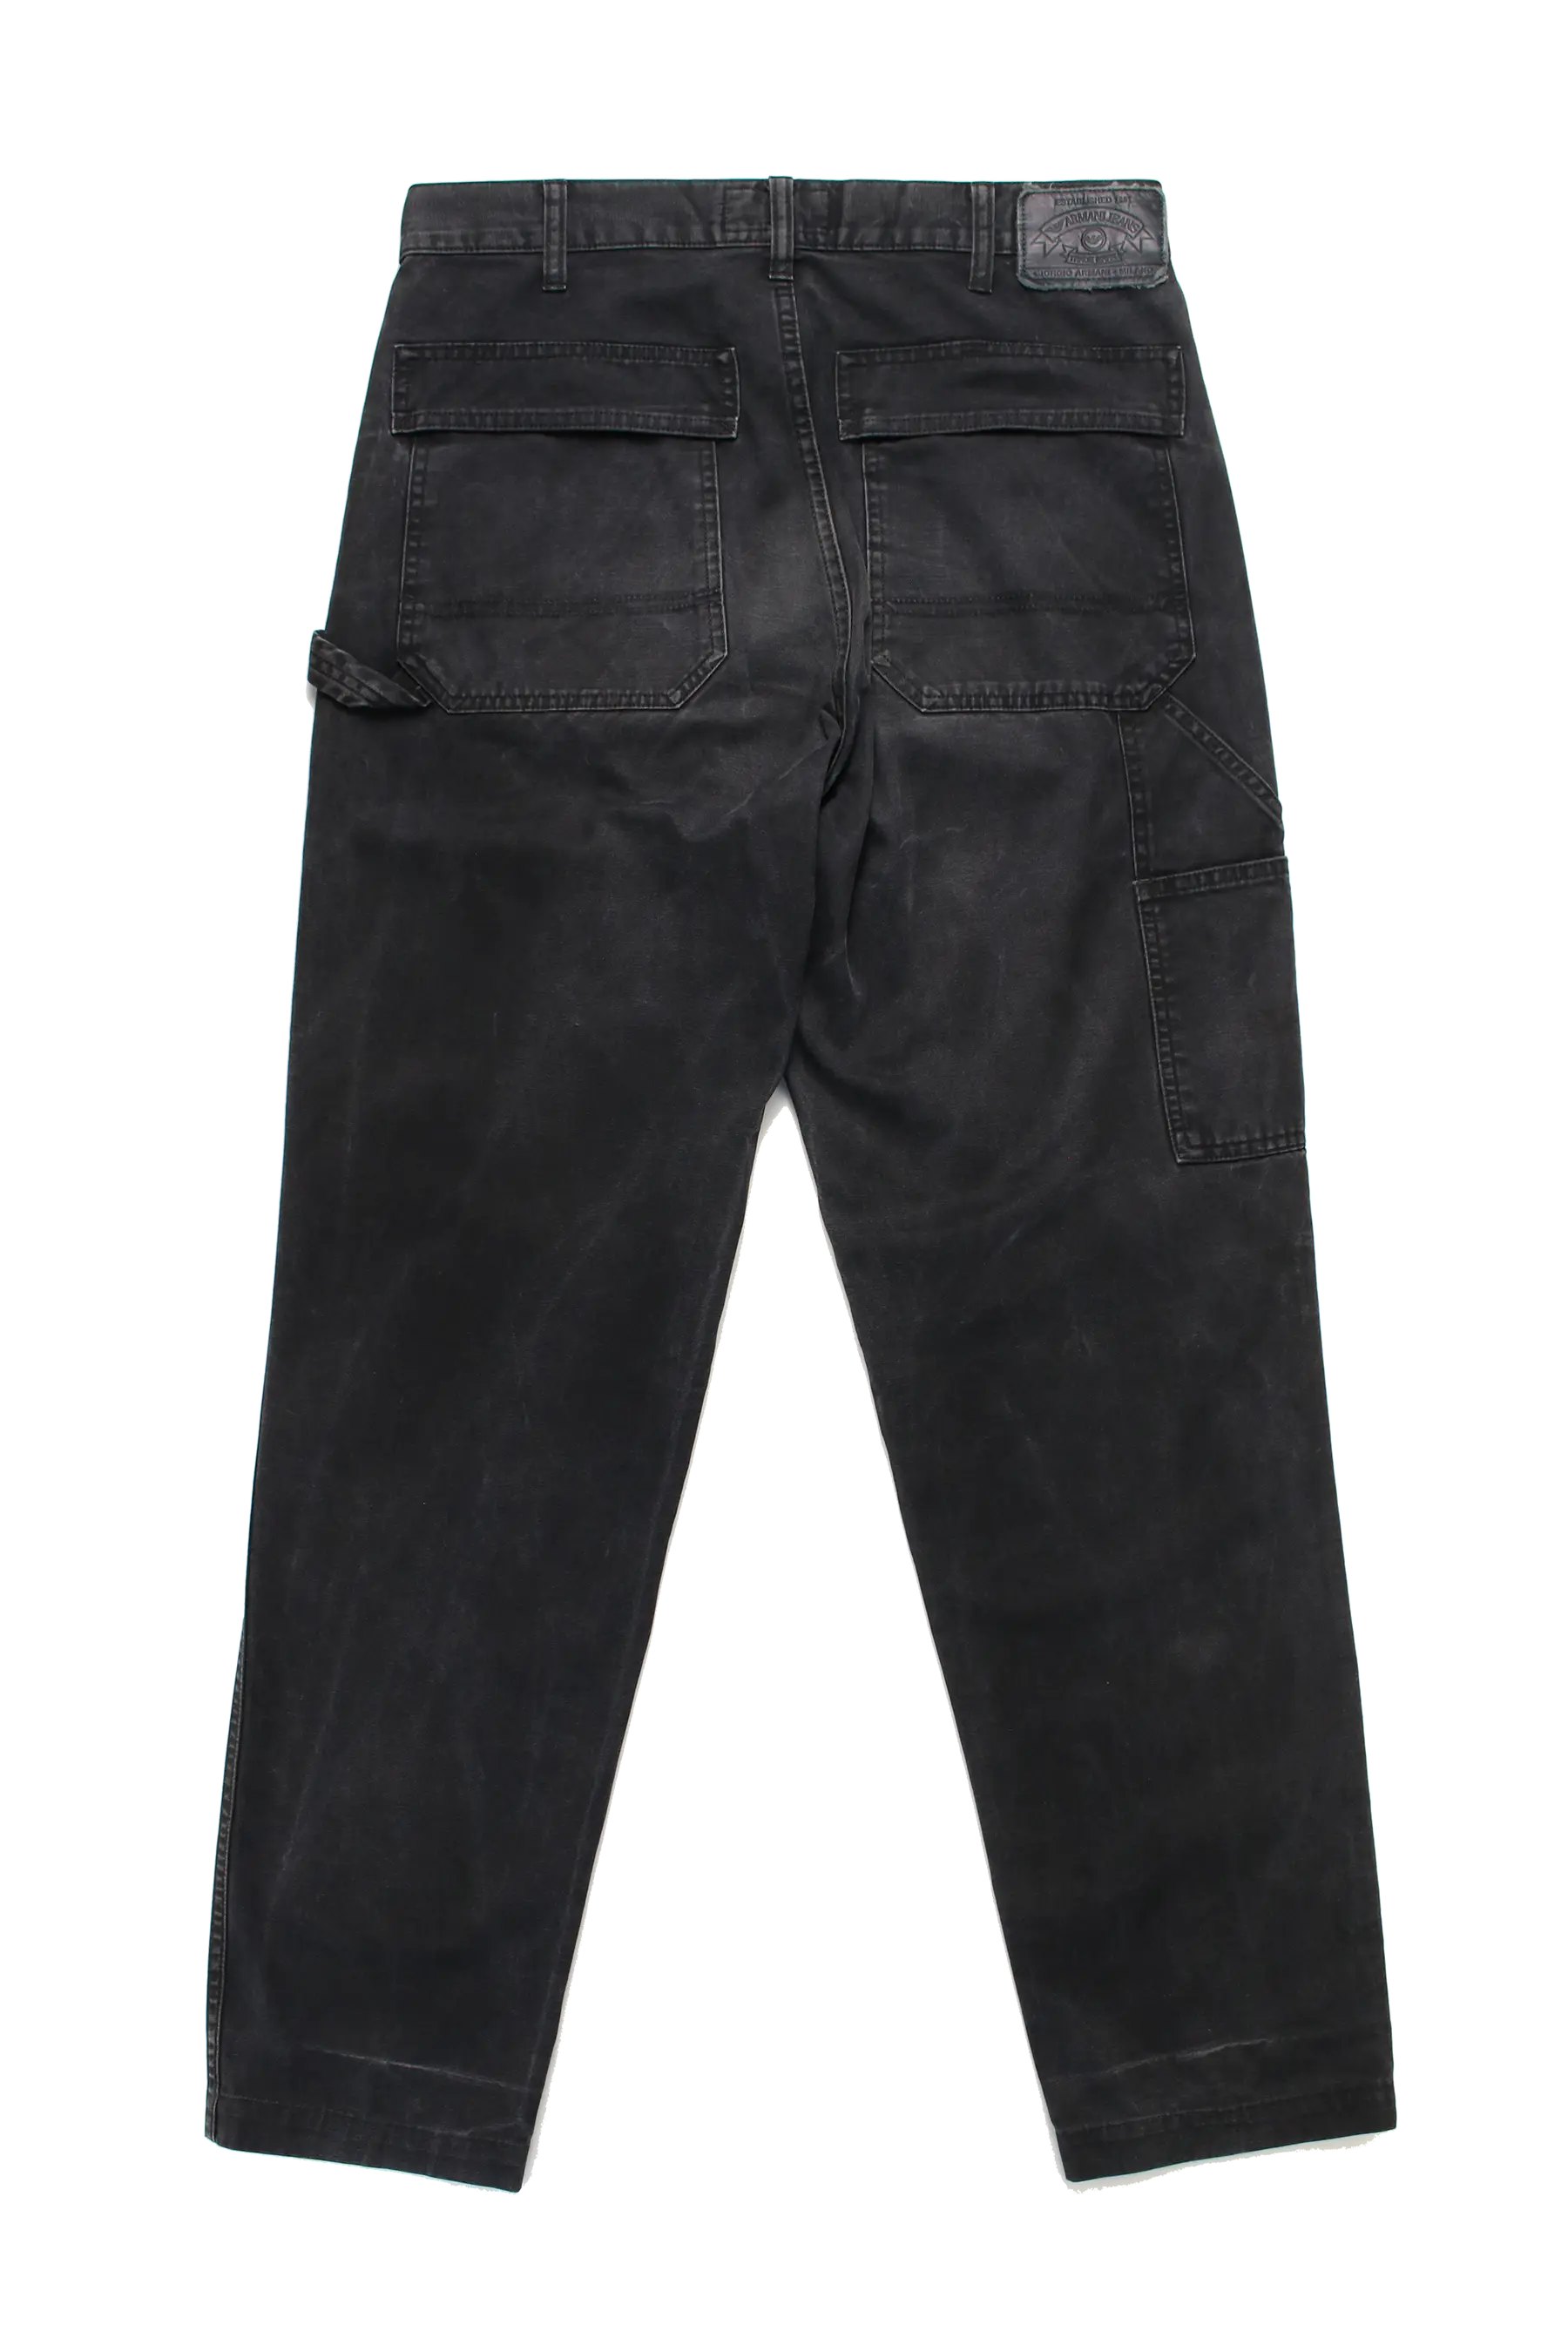 Armani Jeans Carpenter Pants